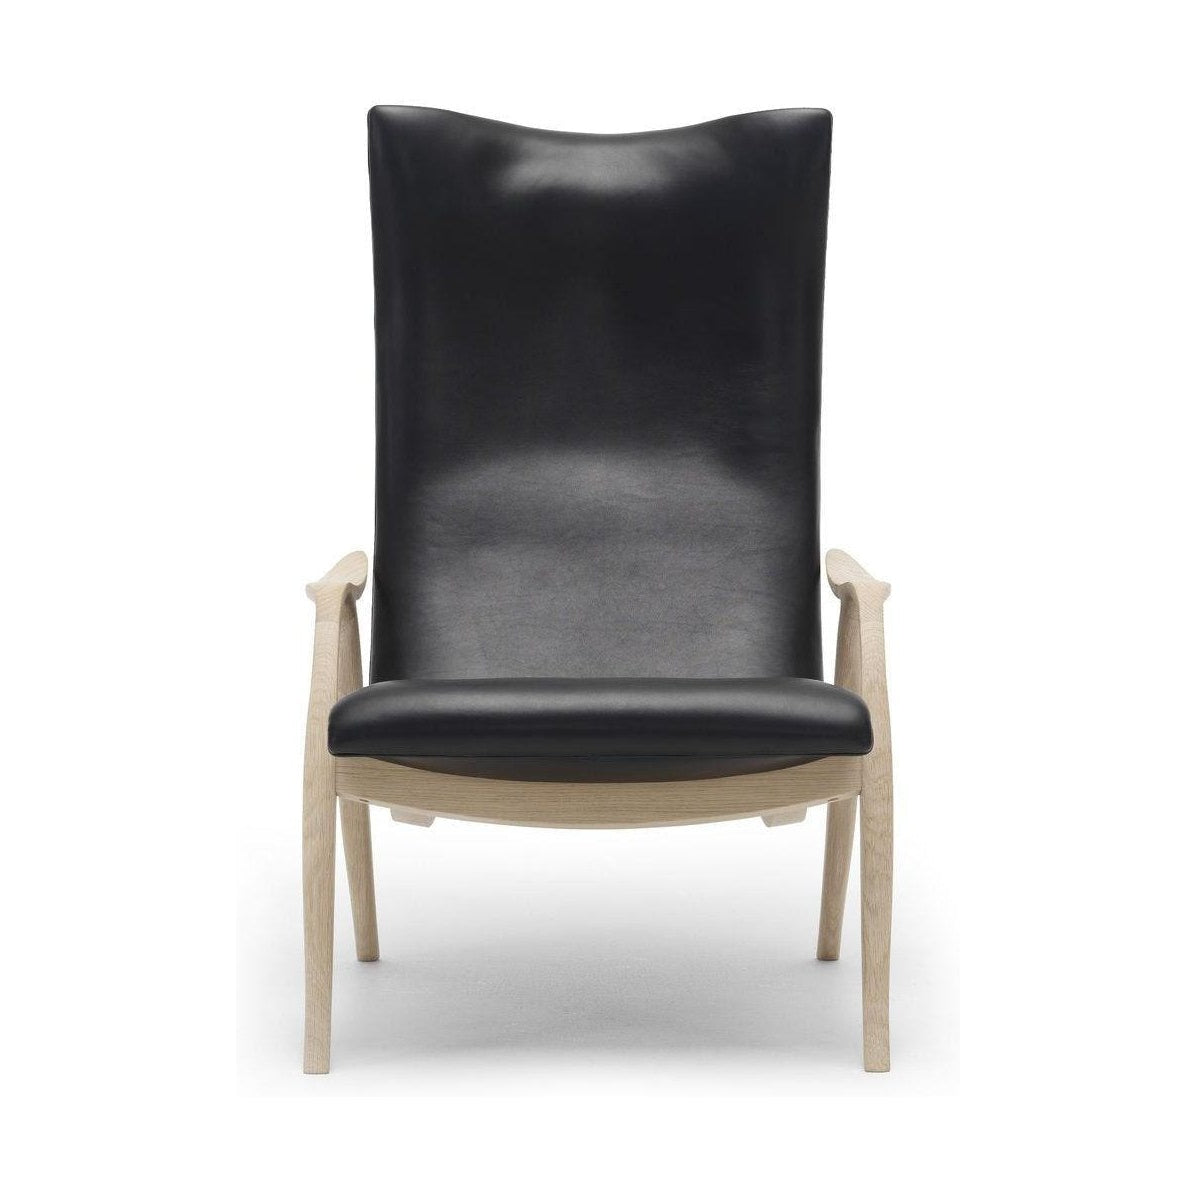 Carl Hansen FH429 Signature stoel, geolied eiken/zwart leer